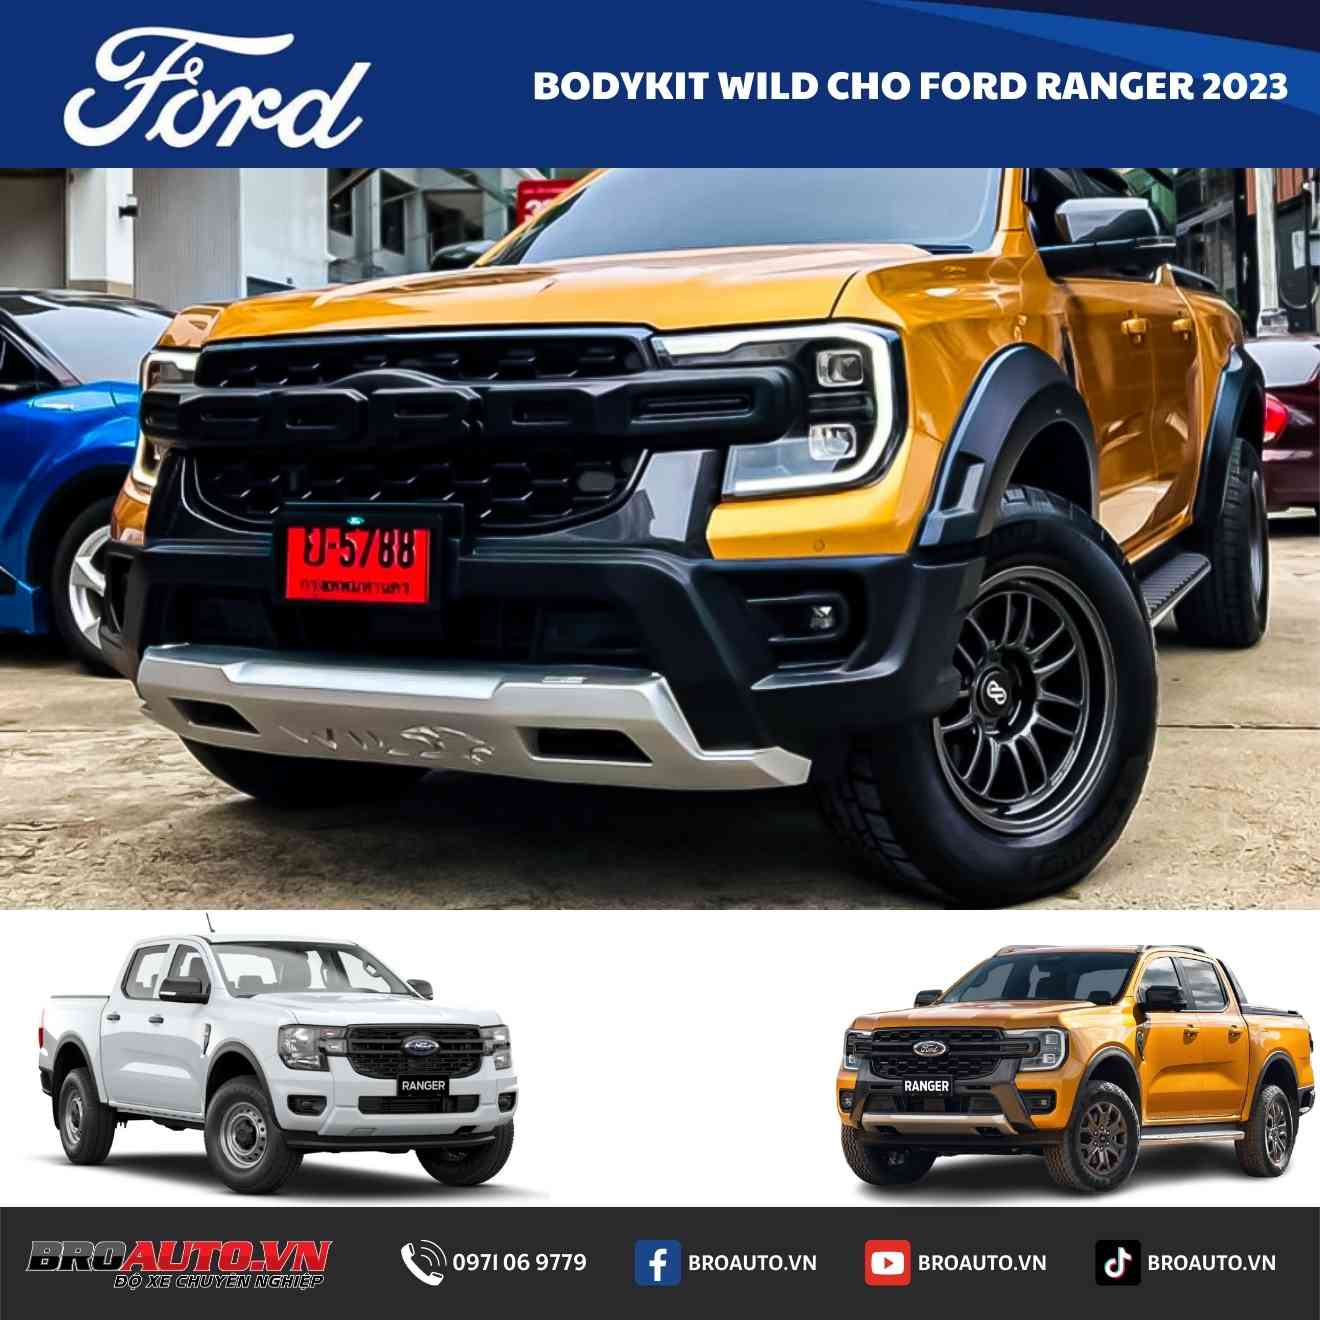 Bodykit Wild Cho Ford Ranger 2023